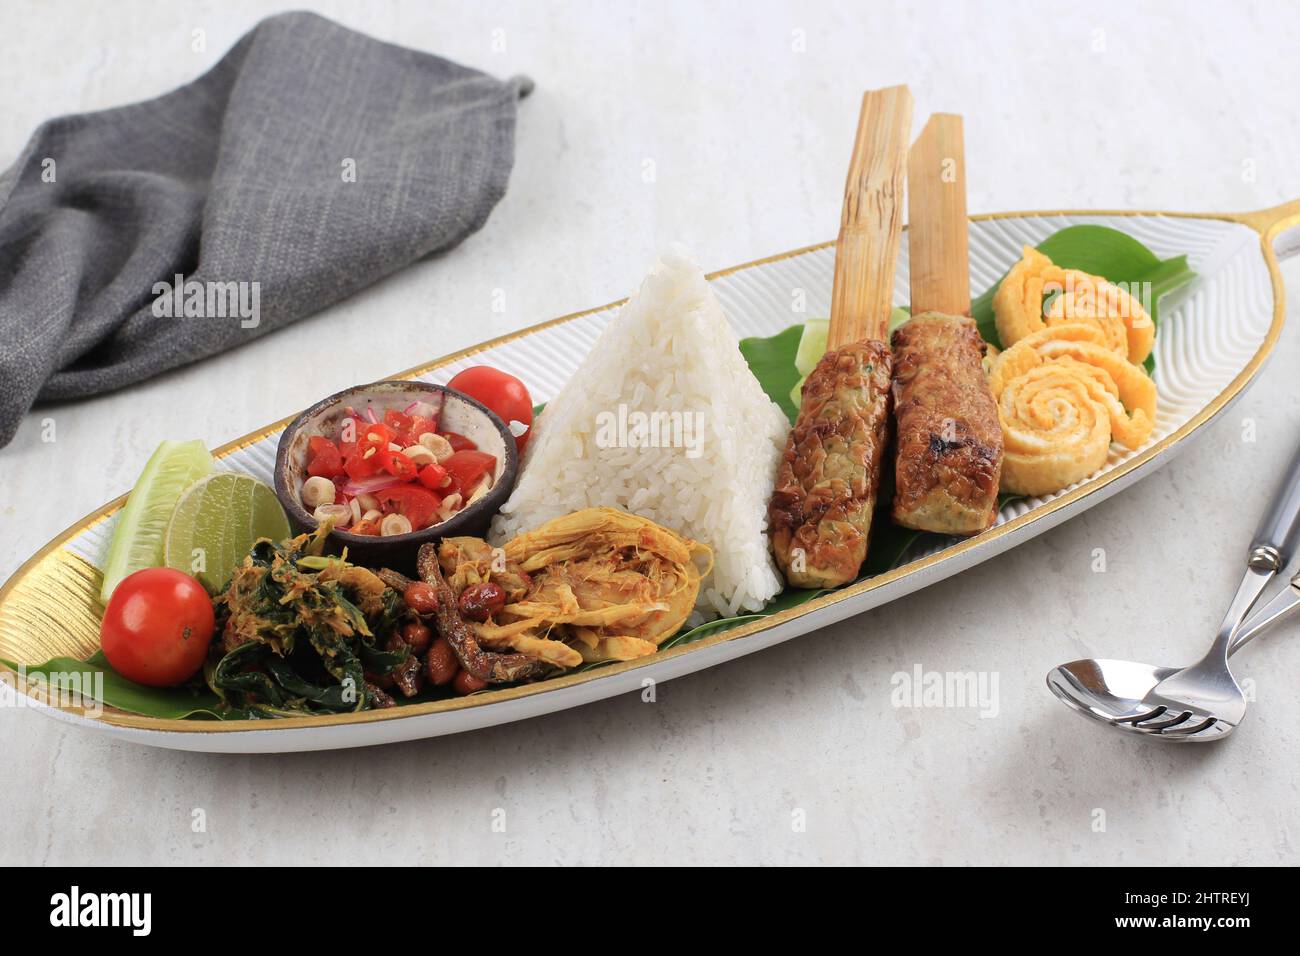 Nasi Campur Bali. Balinese Dish of Steamed Rice with Variety of Side Dishes, such as Sate Lilit, Ayam Pelalah, Telur Dadar, Kacang Teri, Jukut Urap. Stock Photo